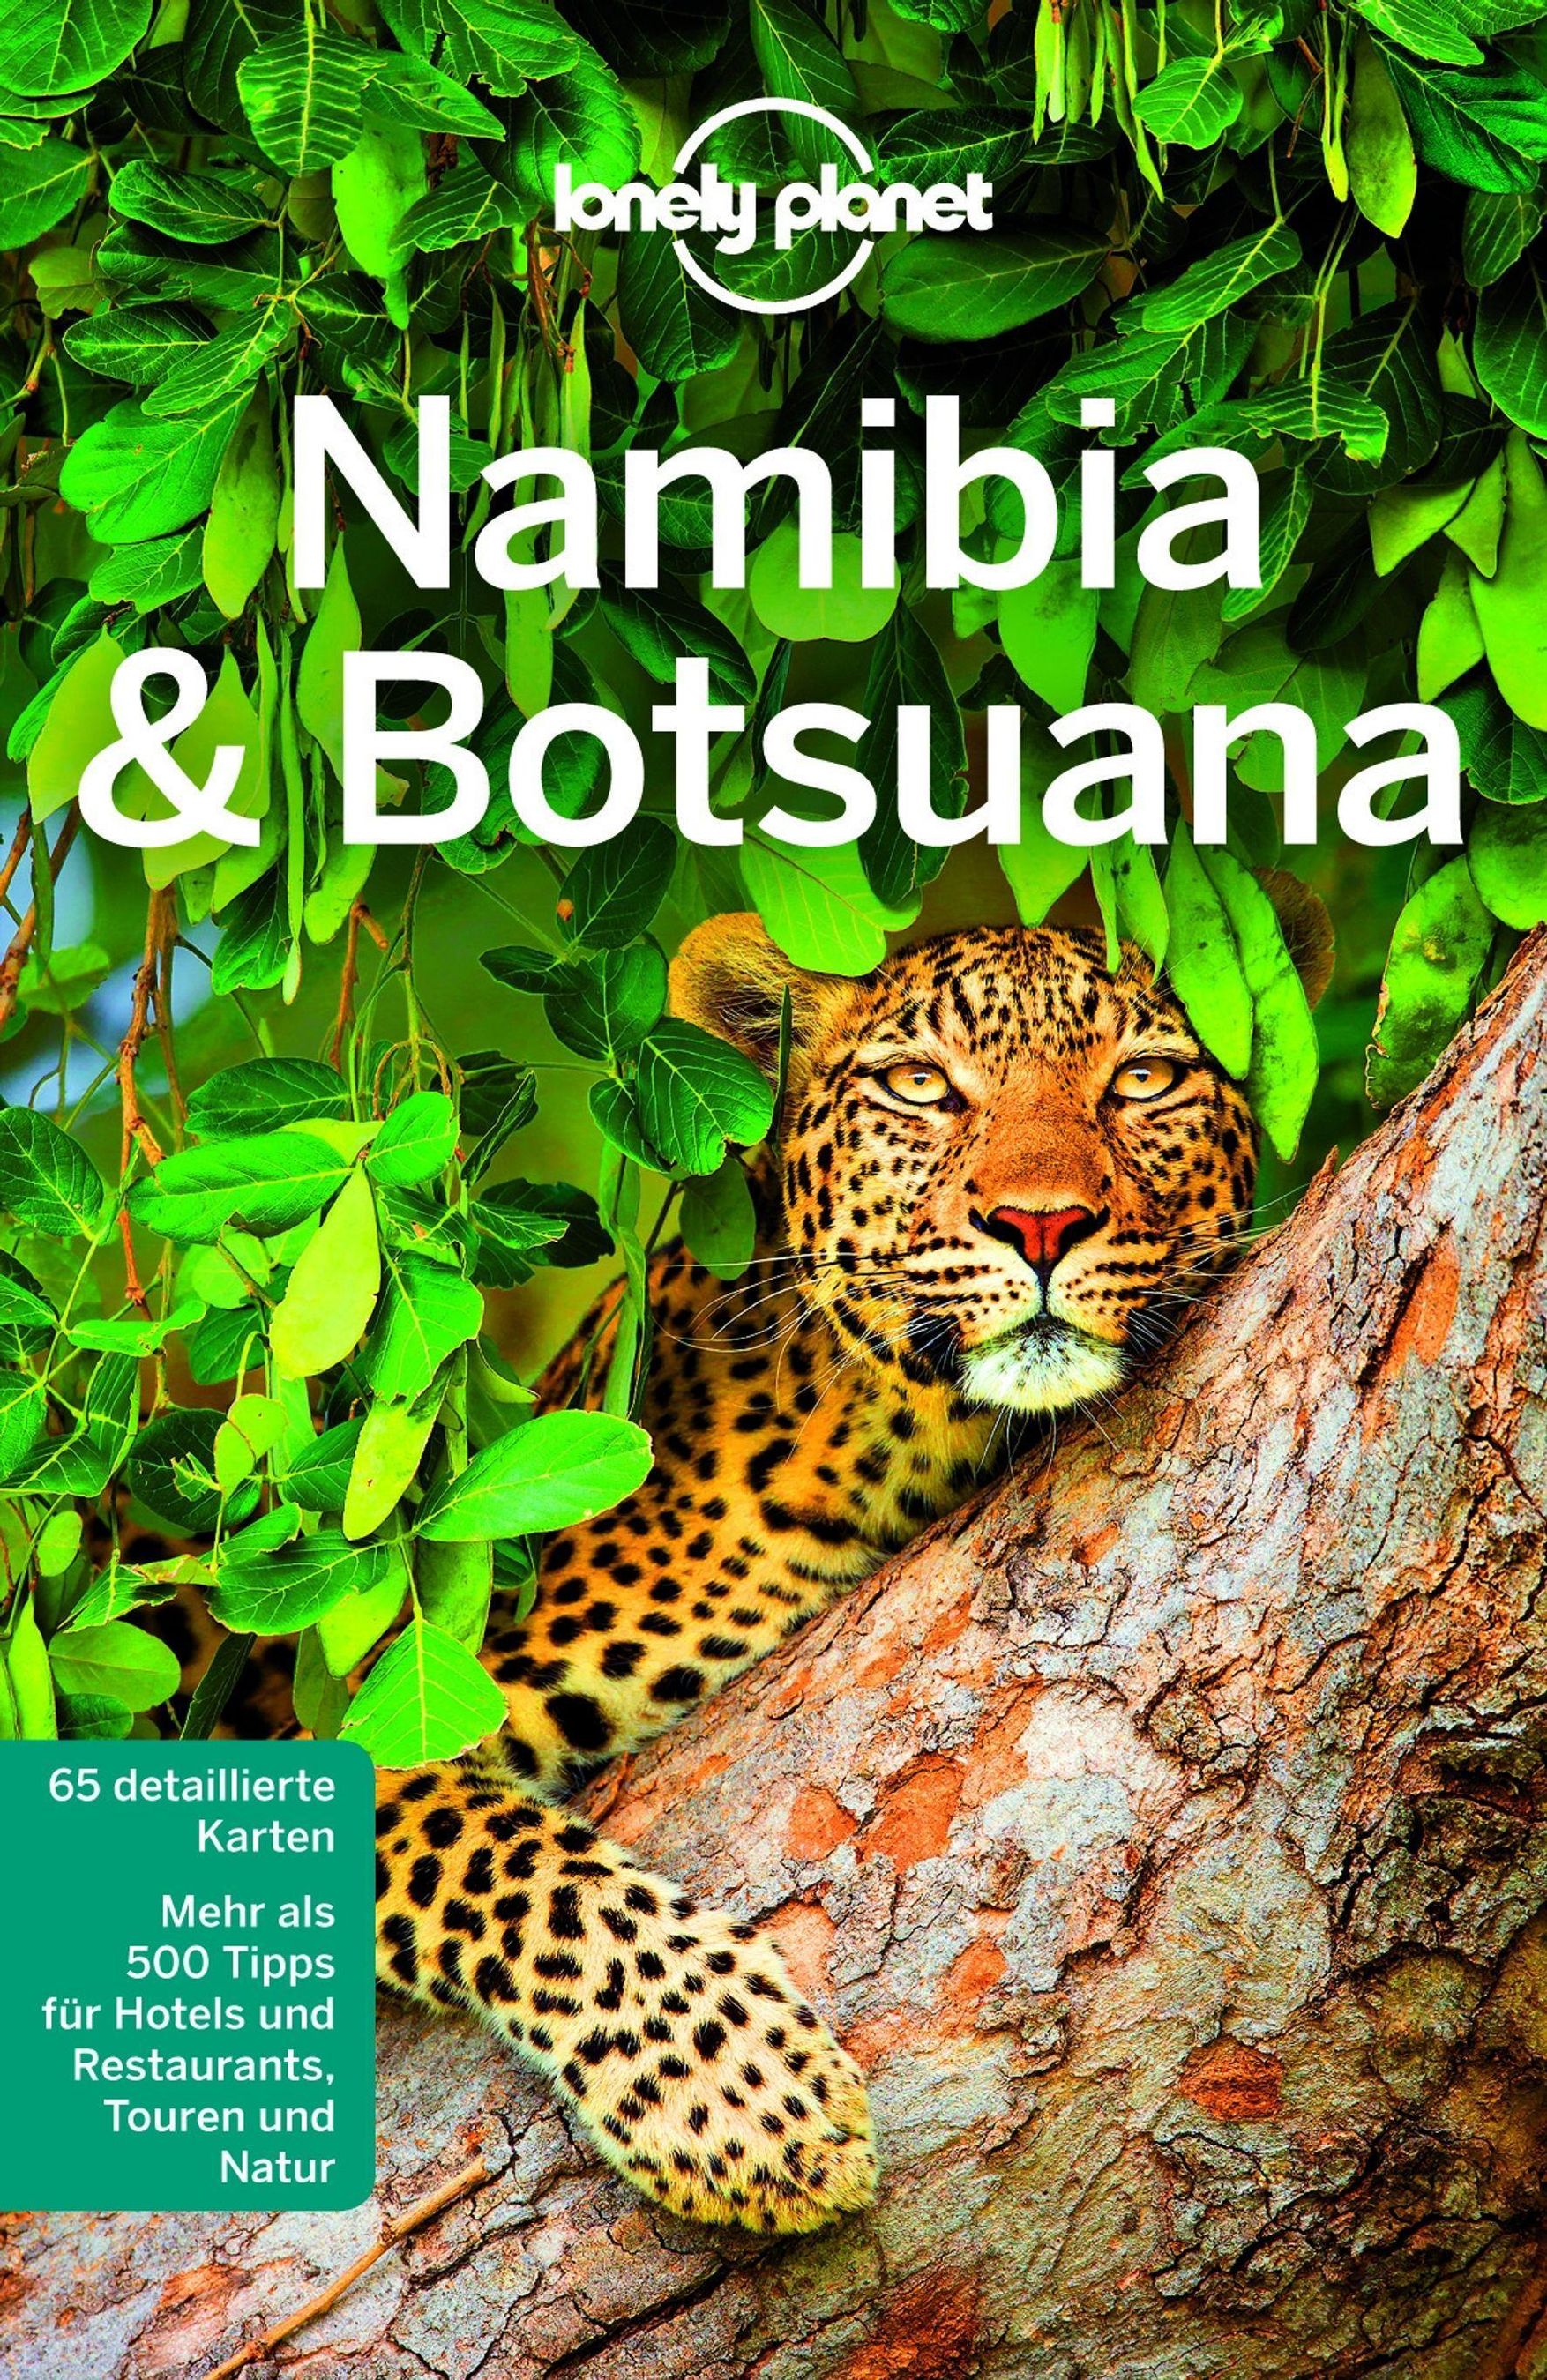 Lonely Planet Reiseführer Namibia & Botsuana Buch versandkostenfrei